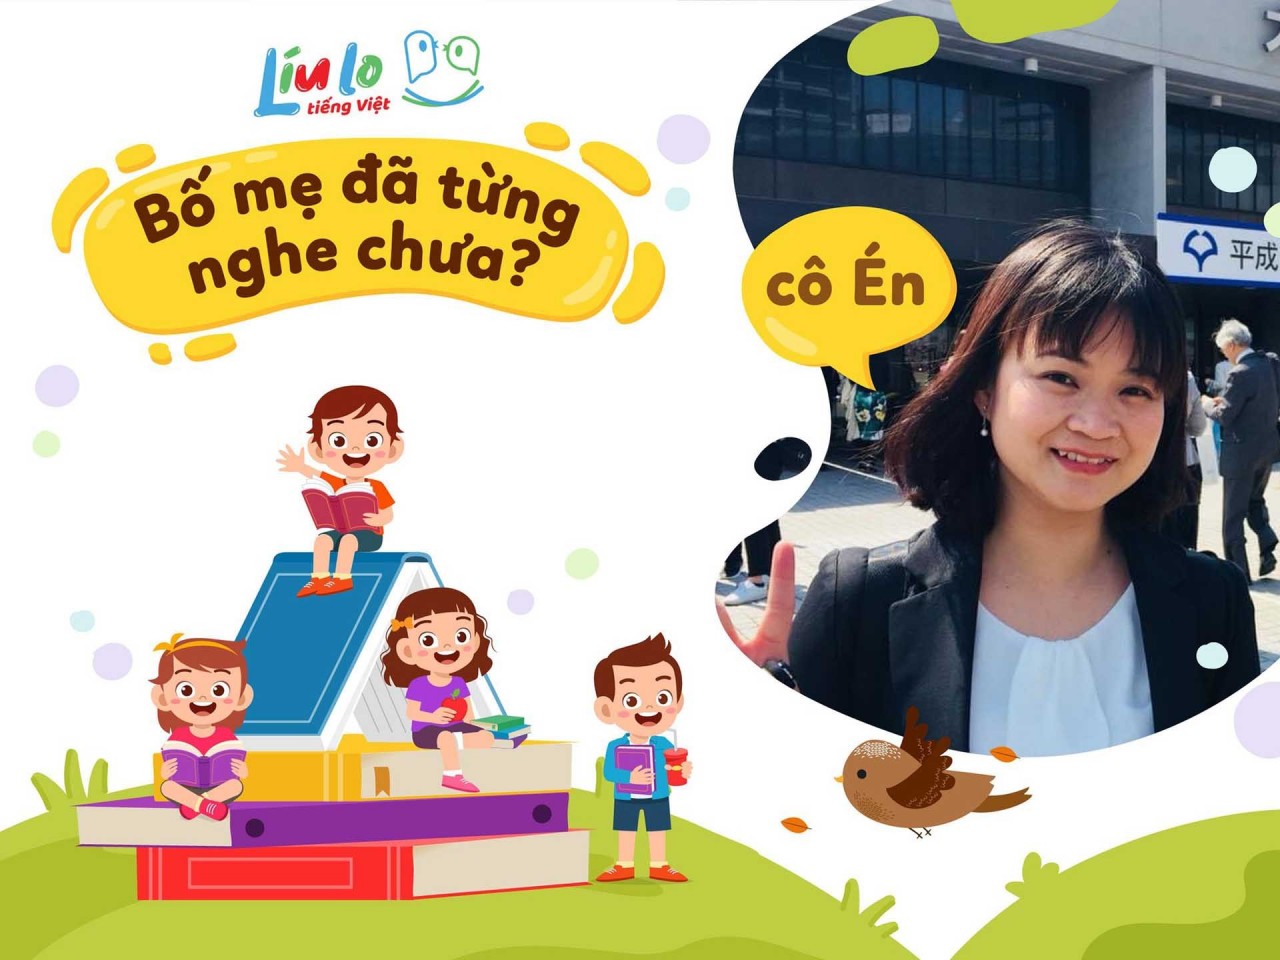 Preserving National Identity Via Vietnamese Class for Overseas Children